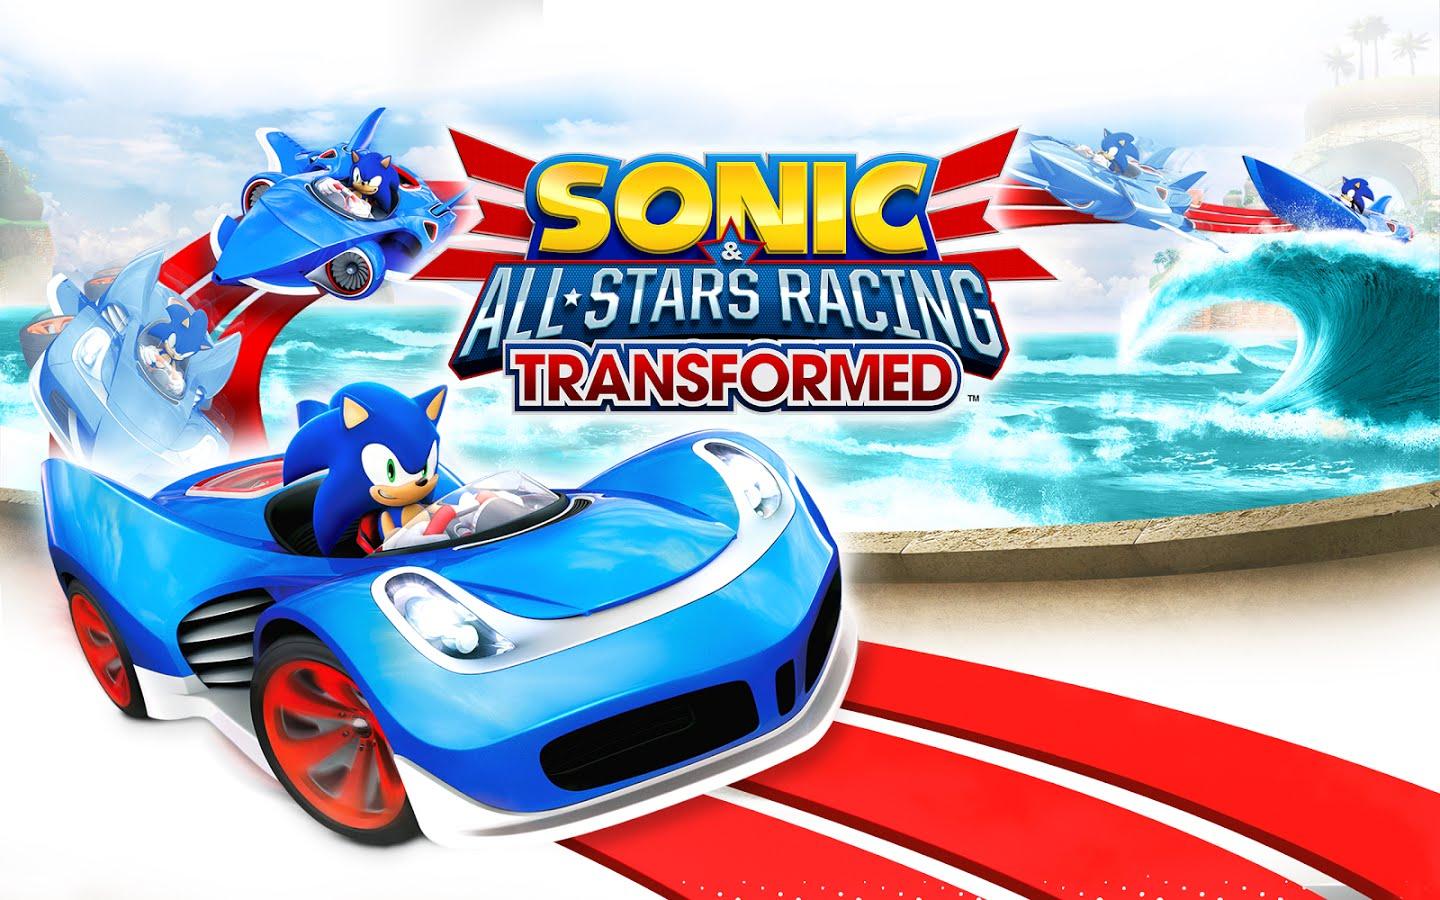 Sonic & All Stars Racing Transformed HD Wallpaper 2 X 900